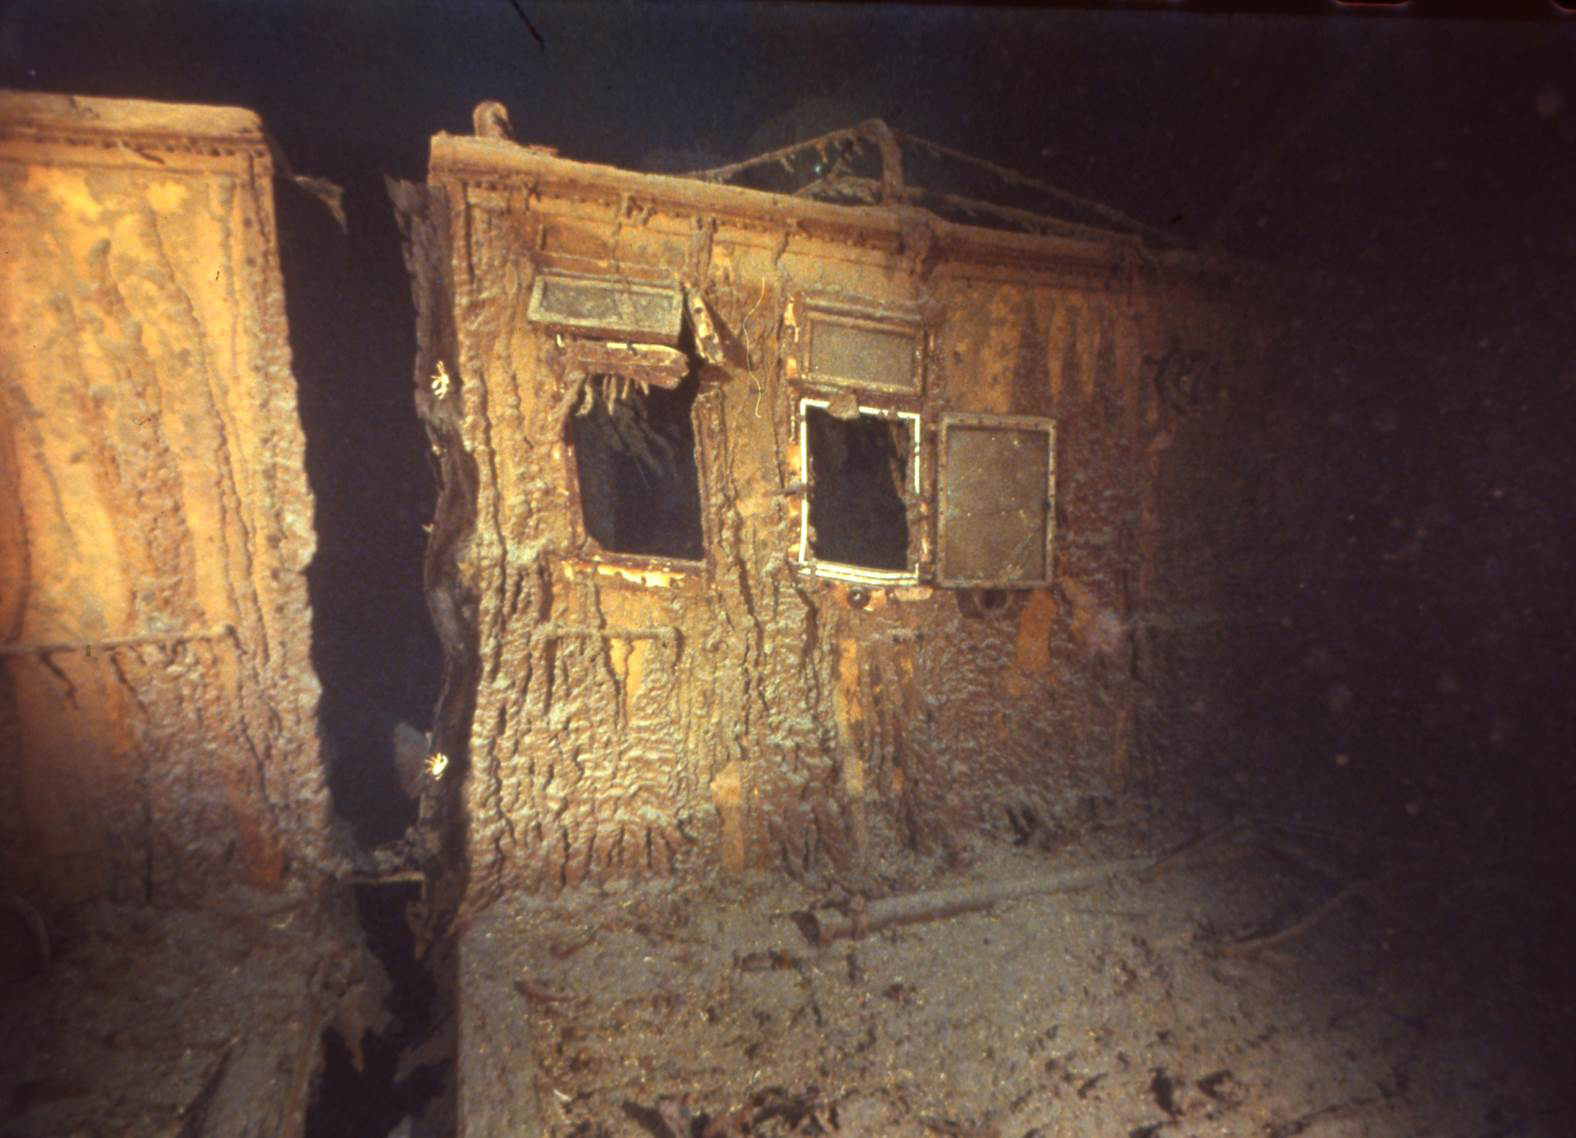 Титаник фото под водой затонувший